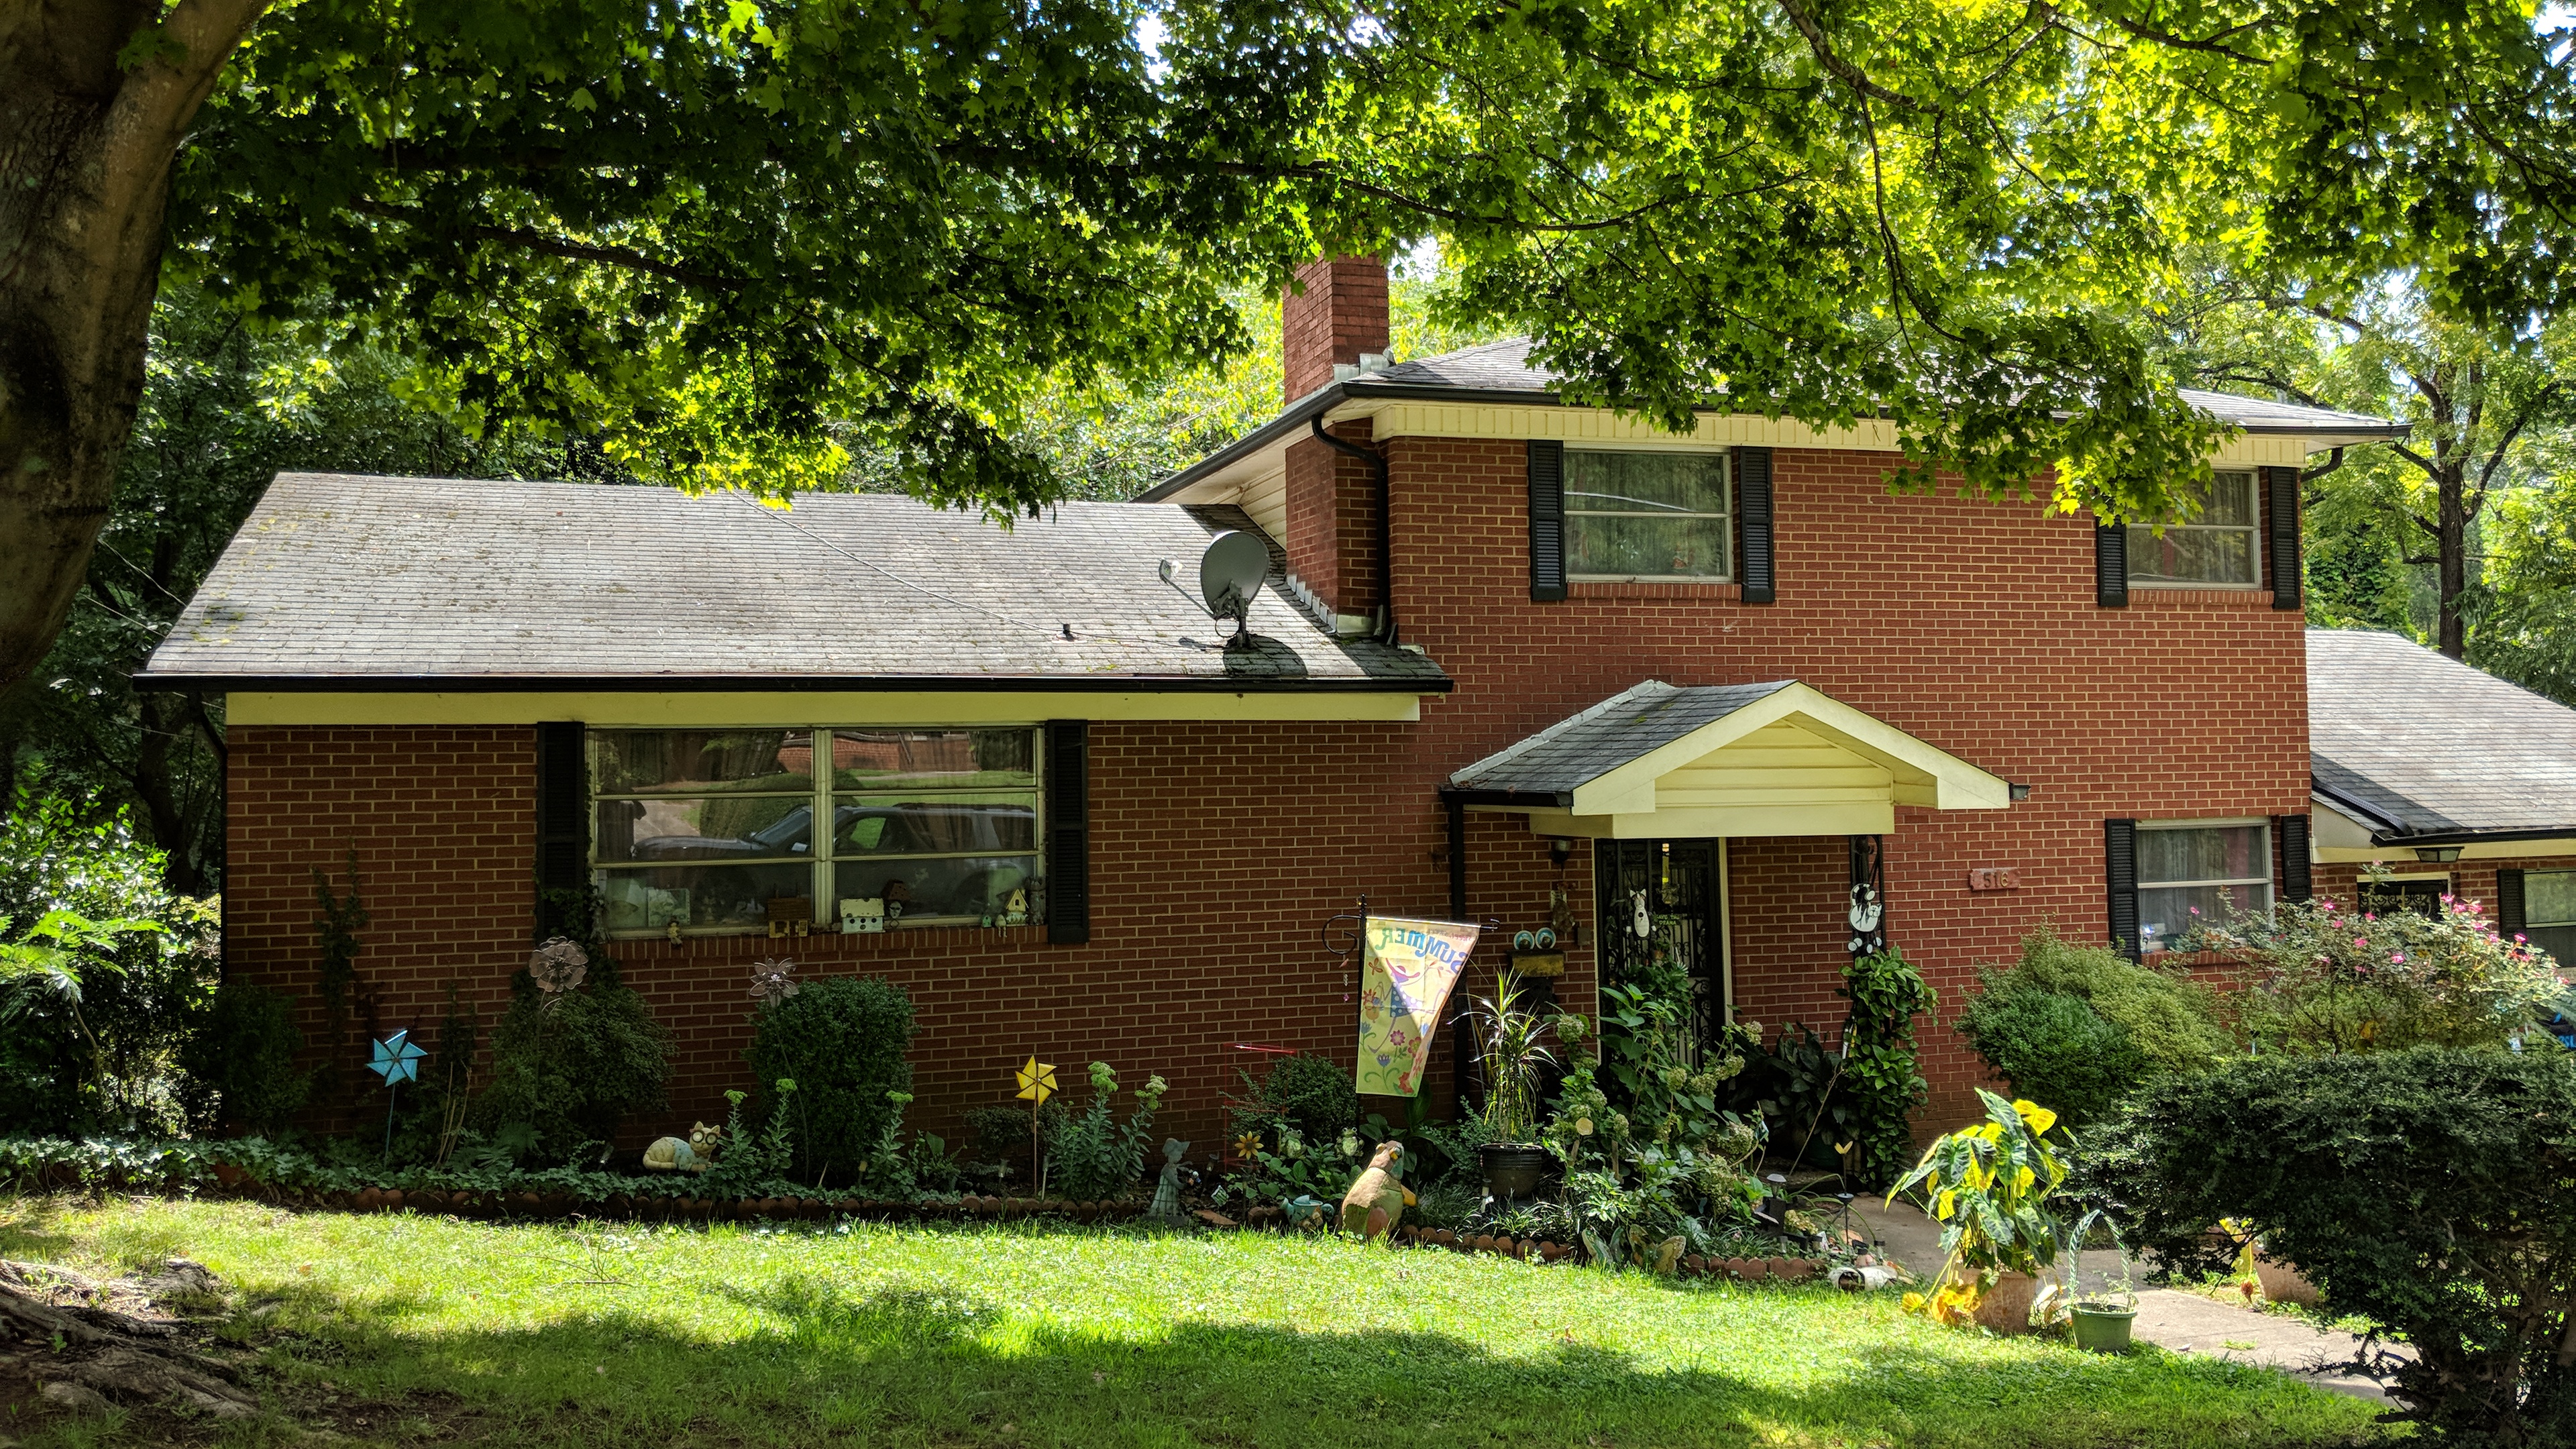 Statesville NC Home for Sale in mid $100k price range VLOG # 147